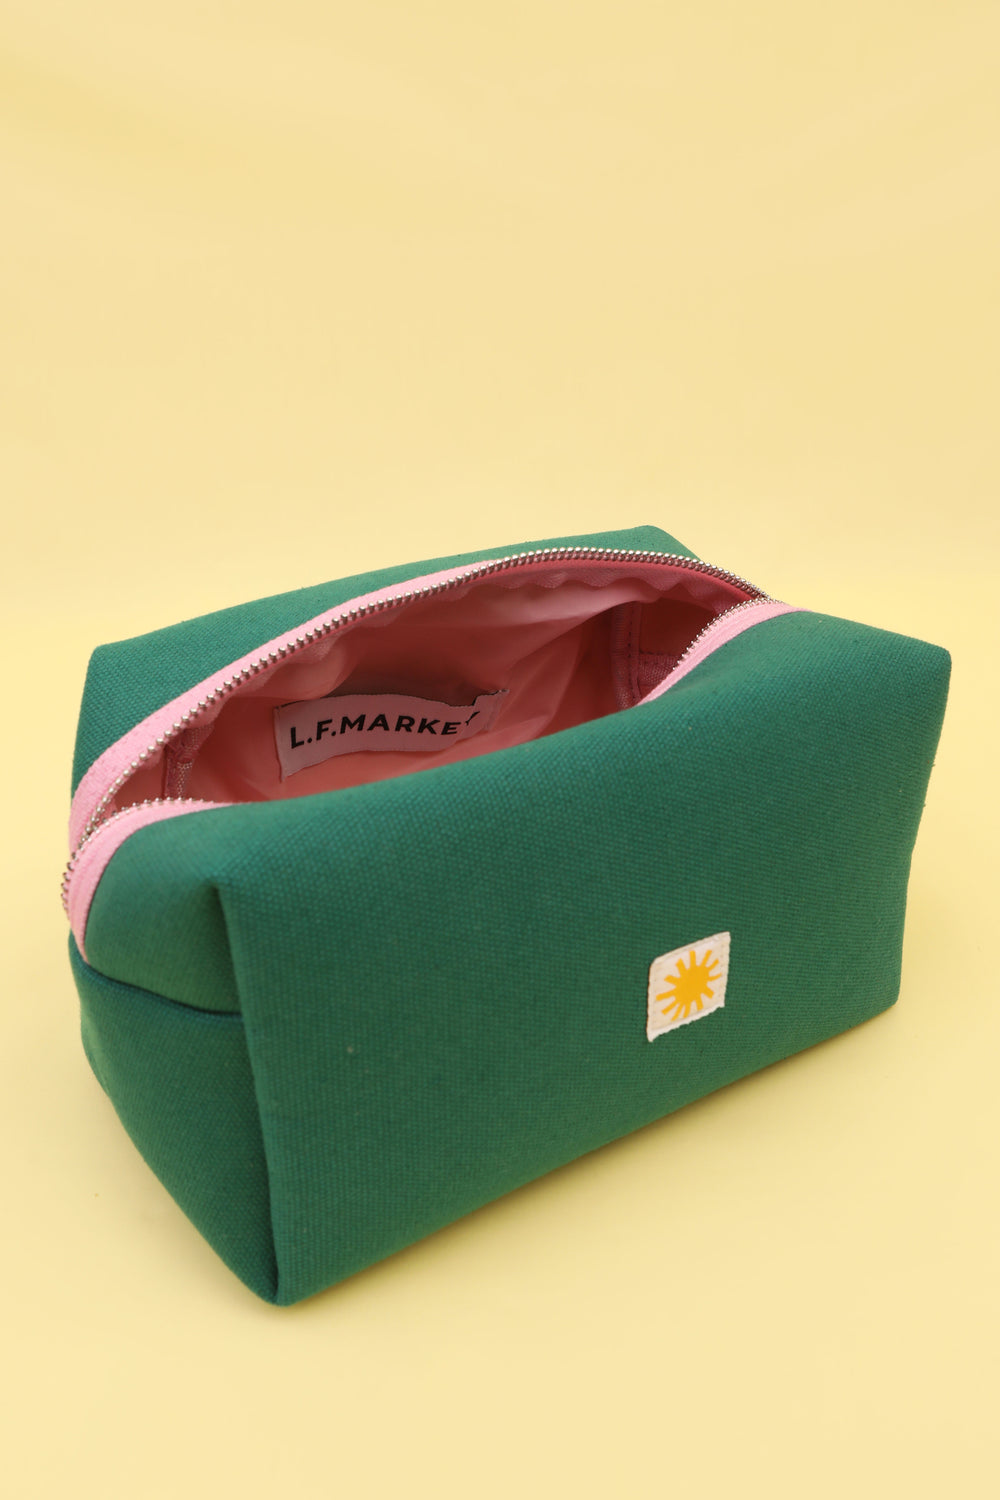 Toiletries Bag Green/Pink